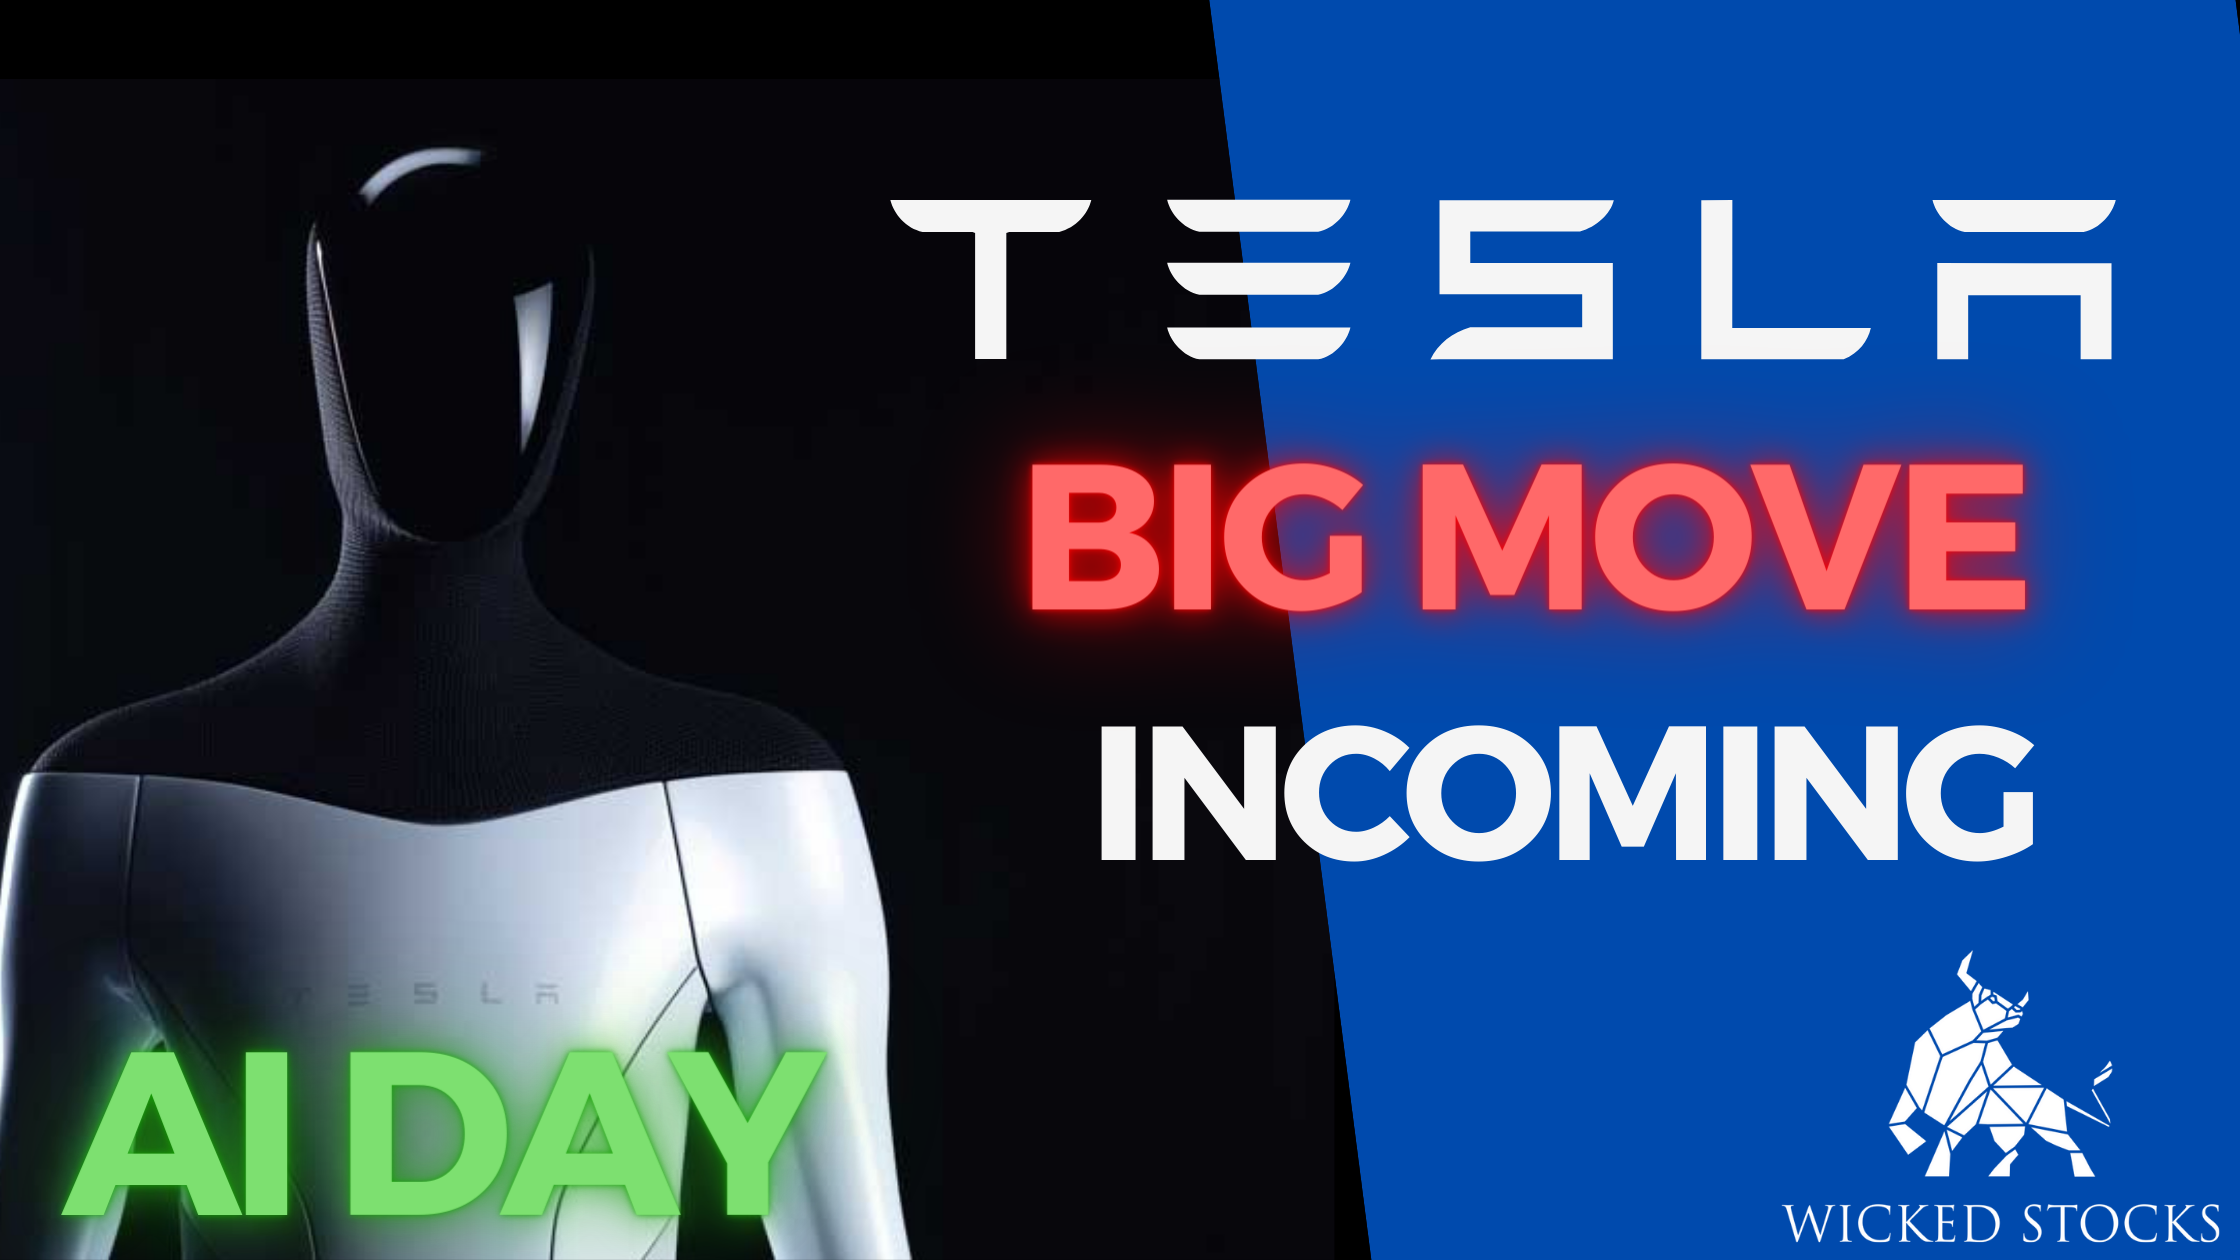 Tesla Inc. (TSLA) Daily Analysis 9/30/2022